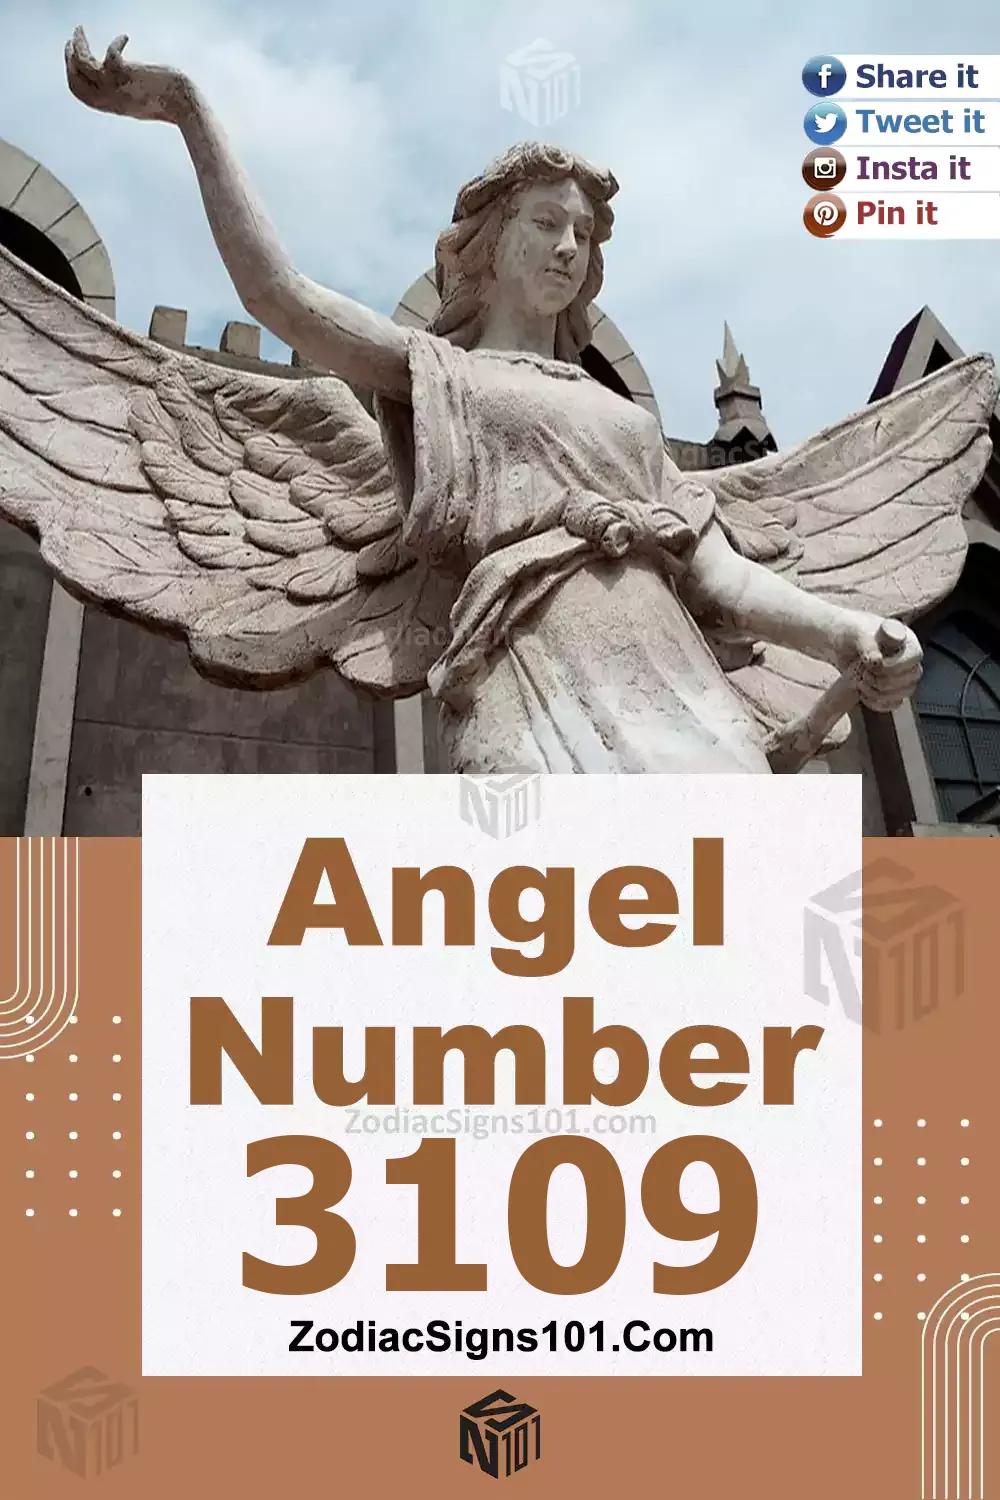 3109-Angel-Number-Meaning.jpg